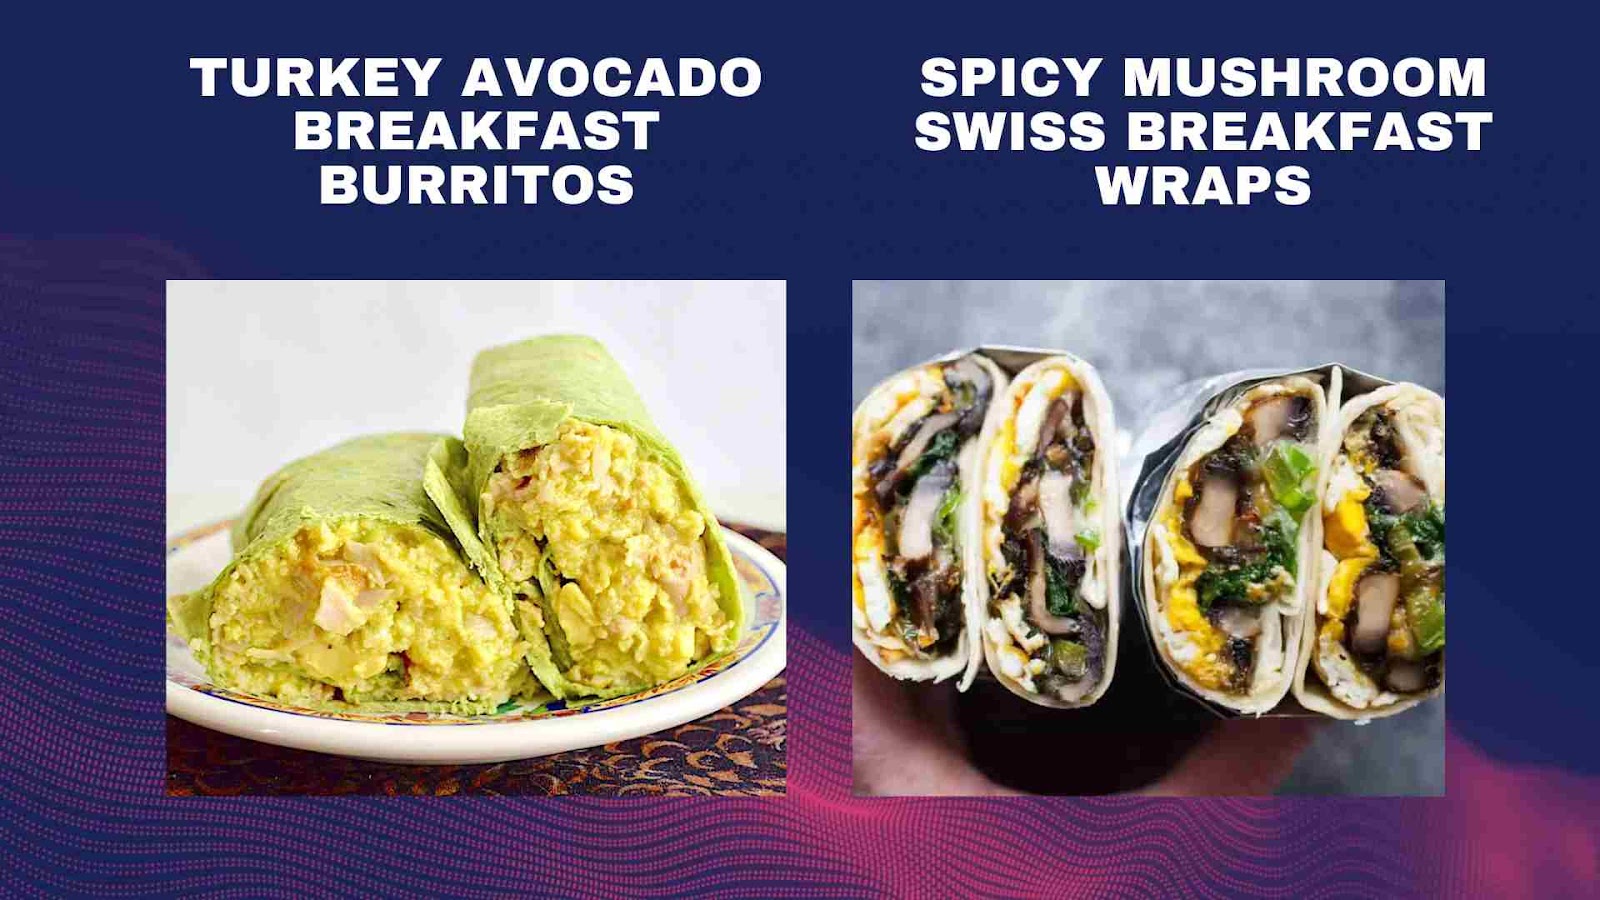 Spicy Mushroom Swiss Breakfast Wrap & Turkey Avocado Breakfast Burritos